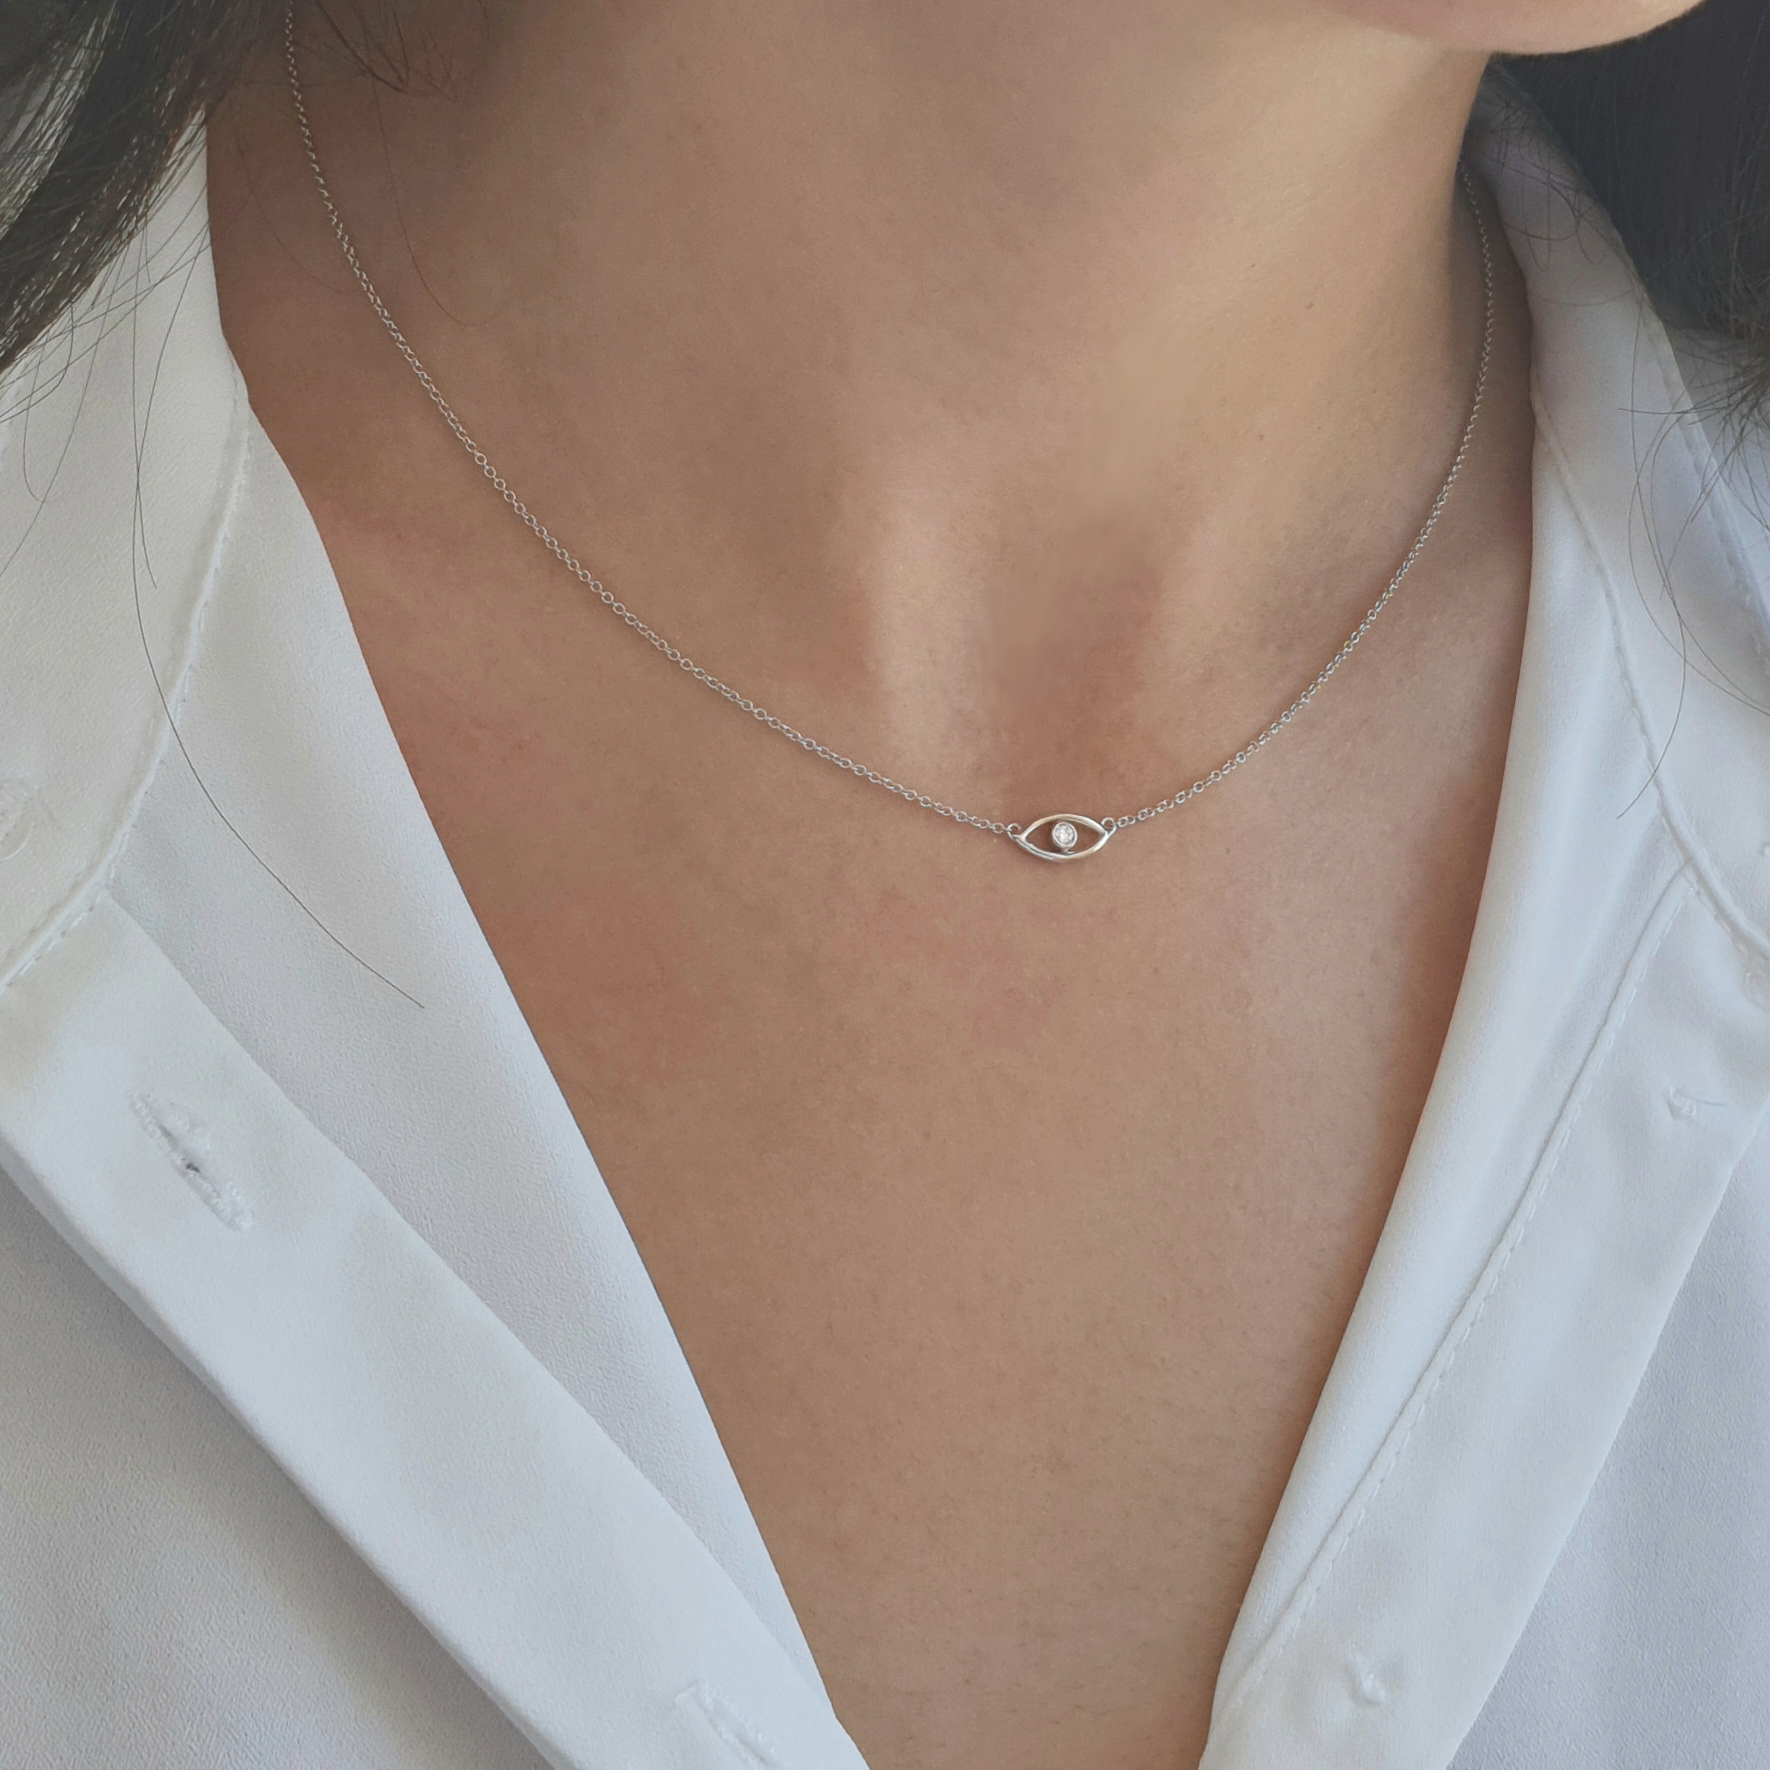 Additional image of 14k gold tiny evil eye diamond necklace / choker / collar